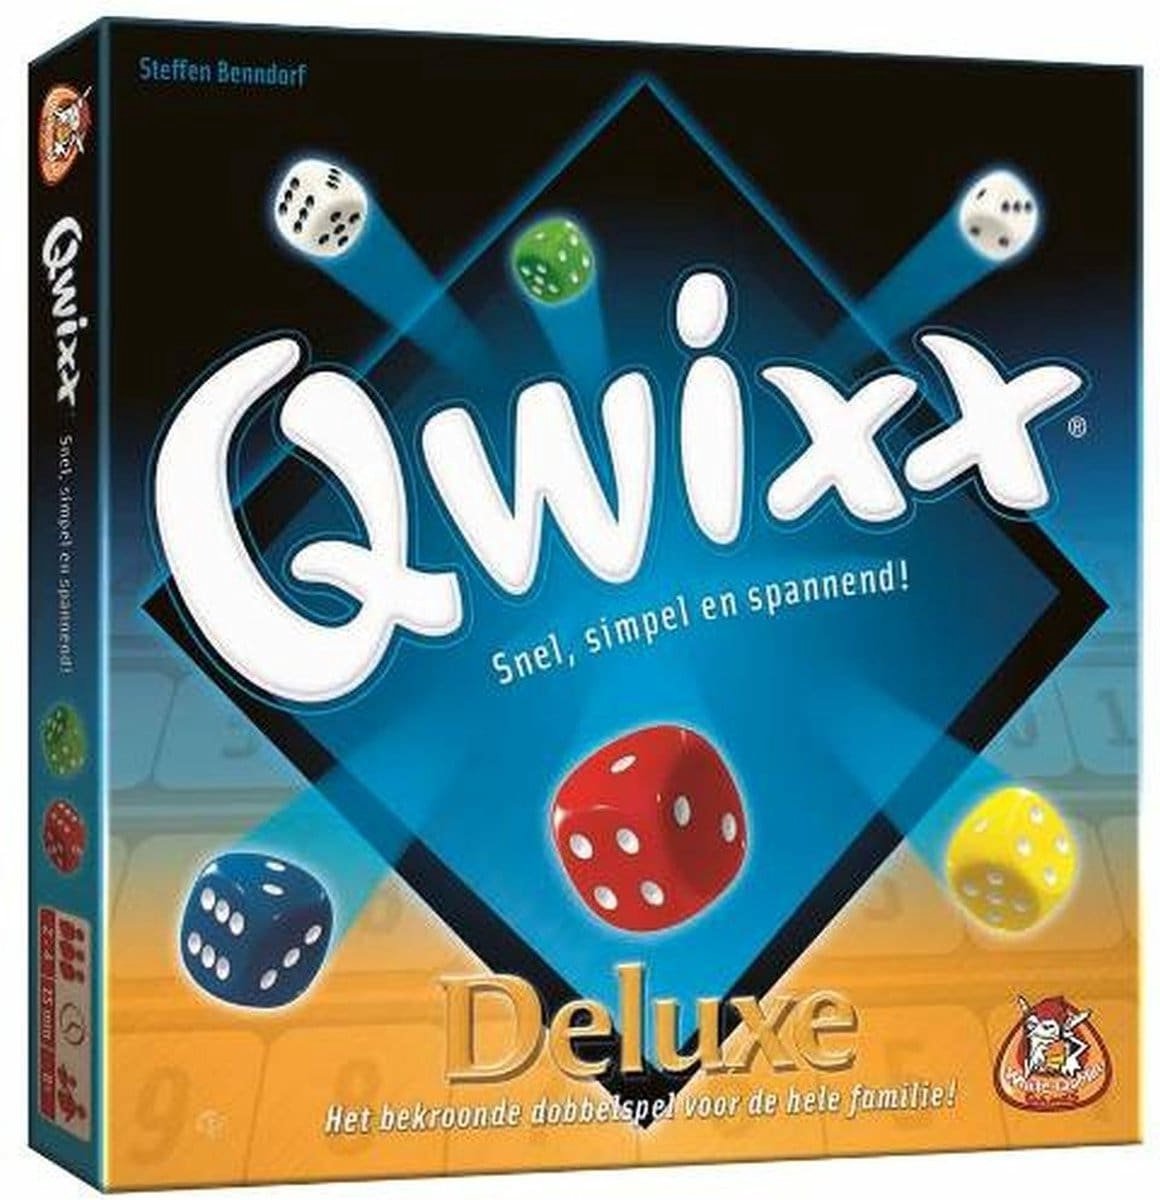 White goblin games Qwixx deluxe